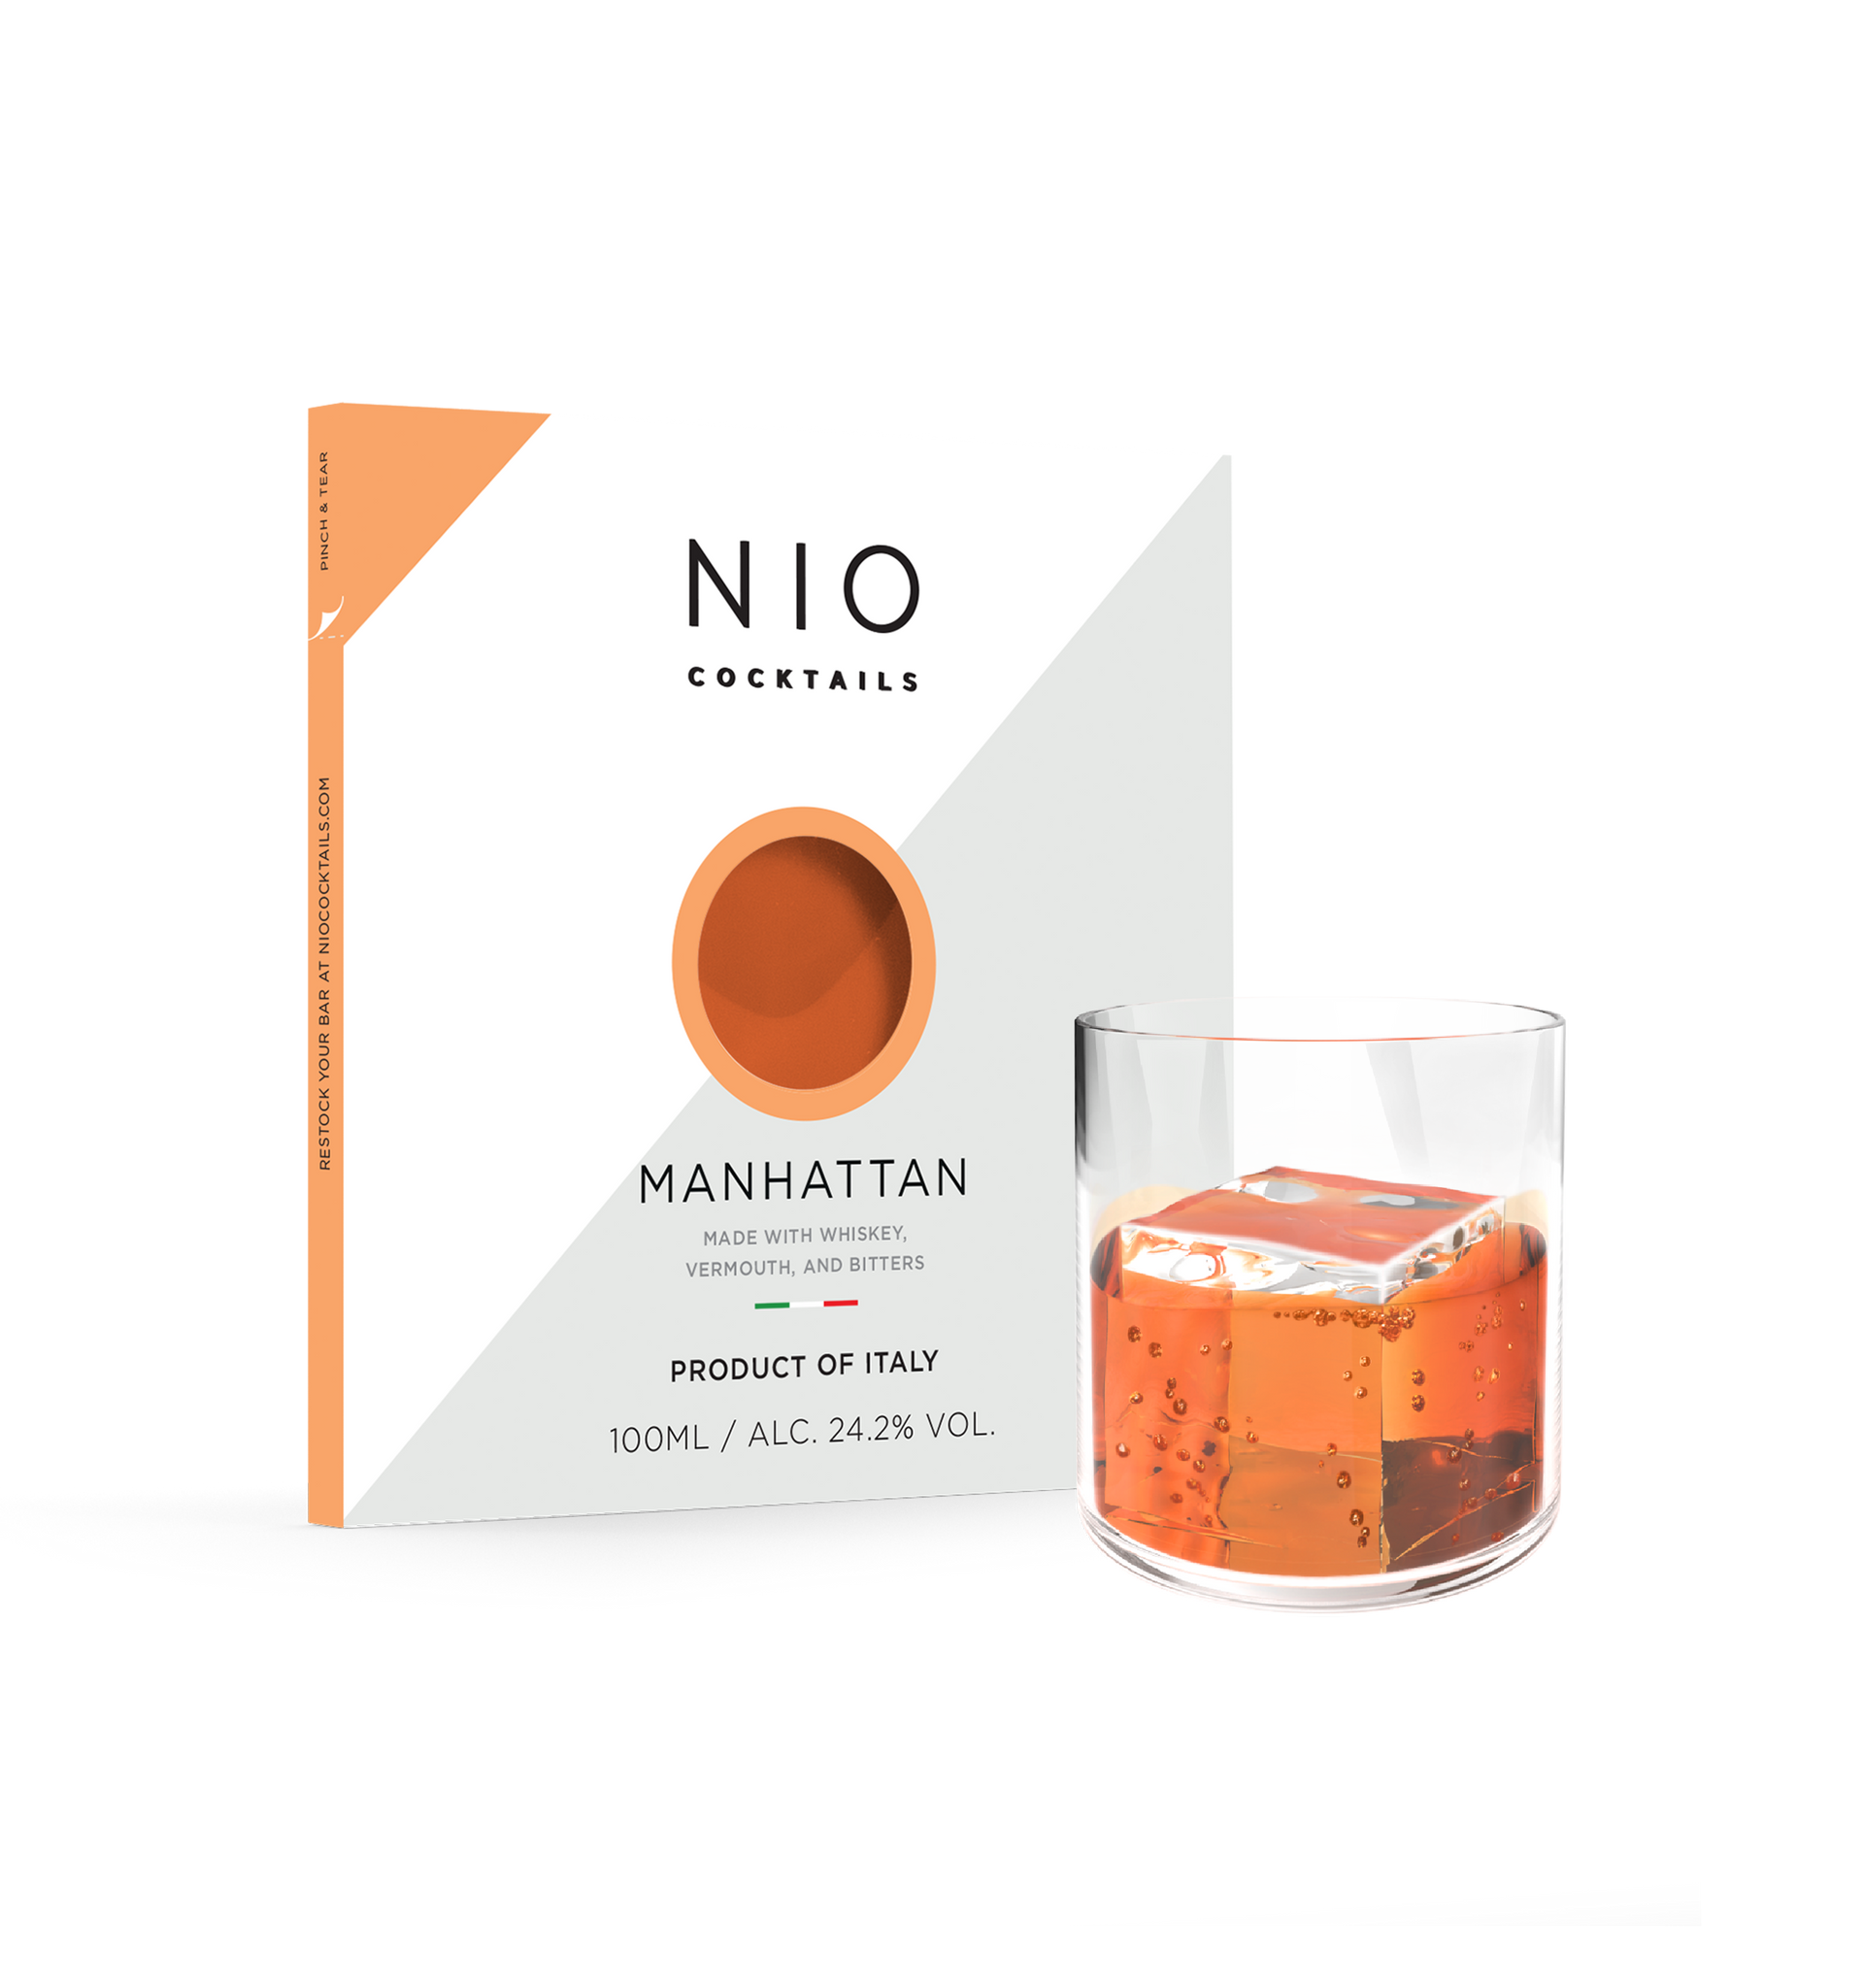 NIO COCKTAILS Manhattan glass